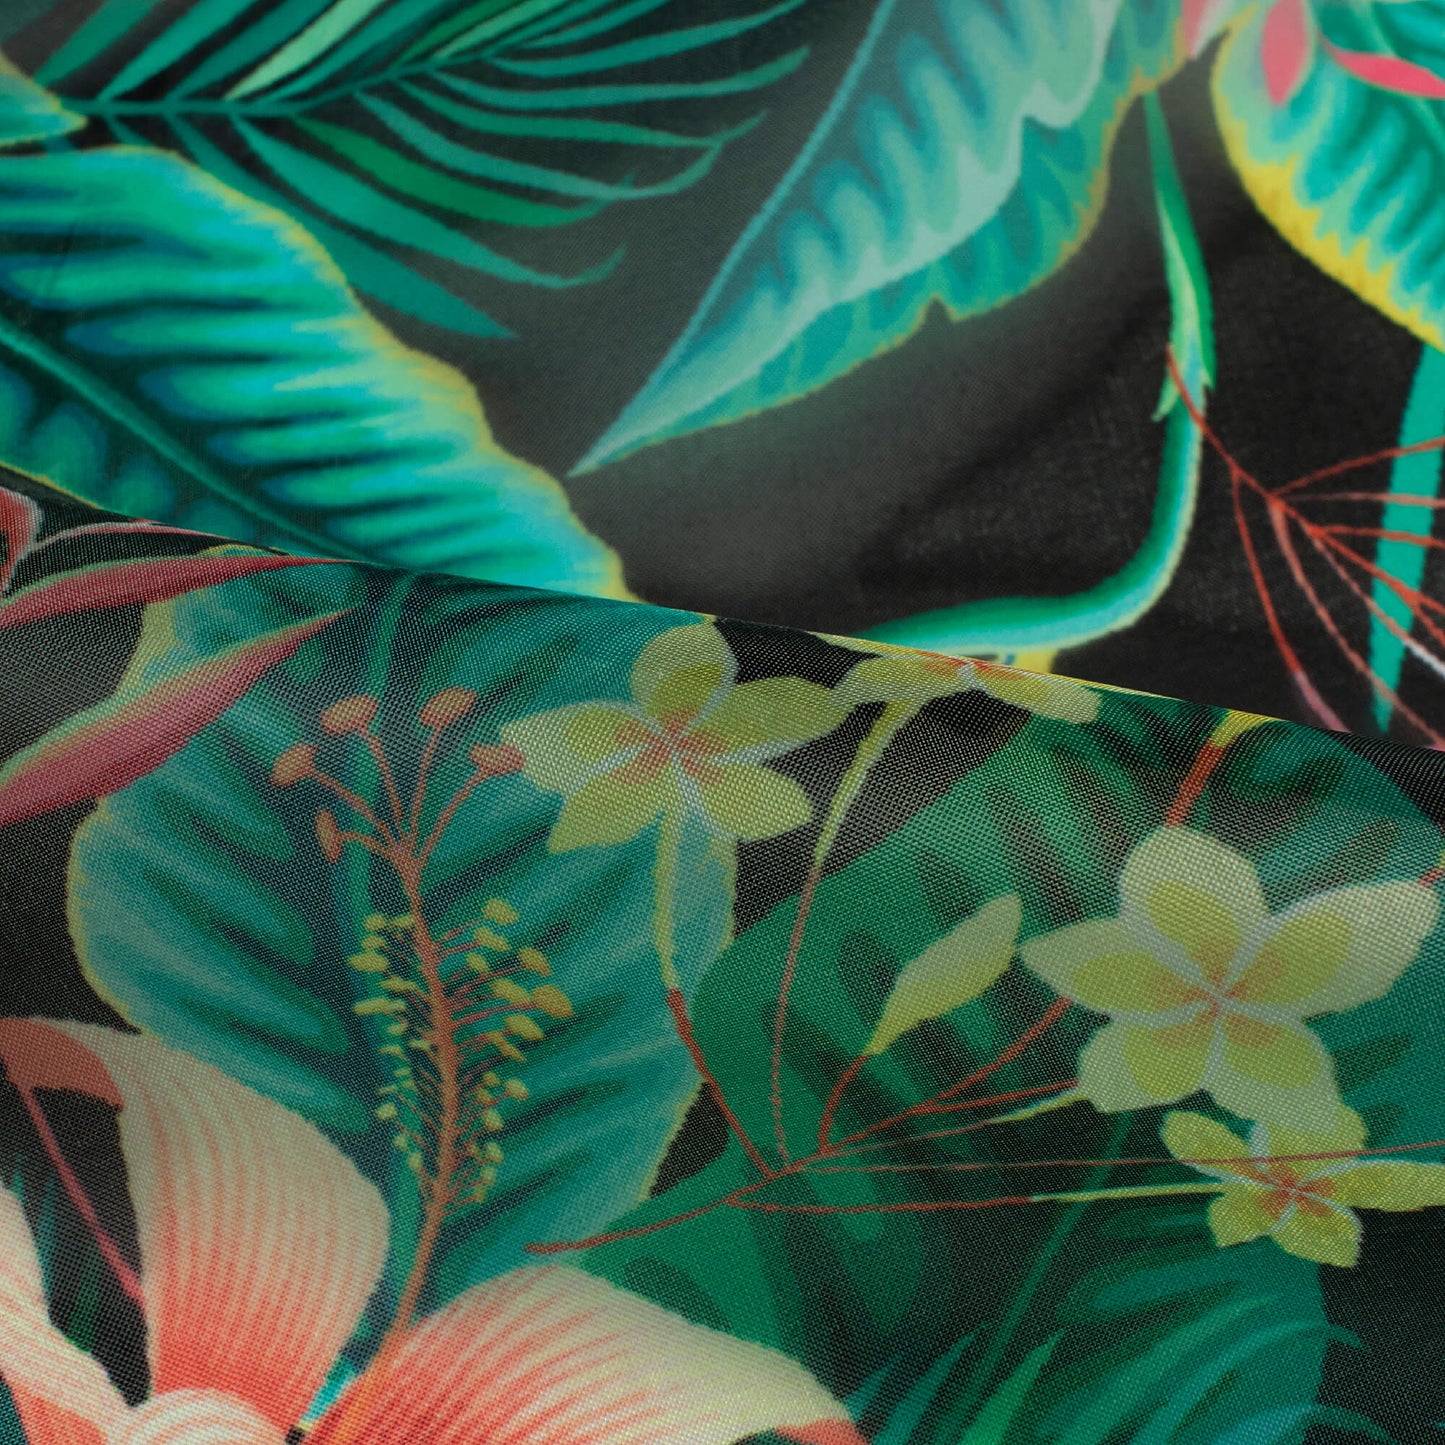 Black And Taffy Pink Tropical Pattern Digital Print Organza Satin Fabric